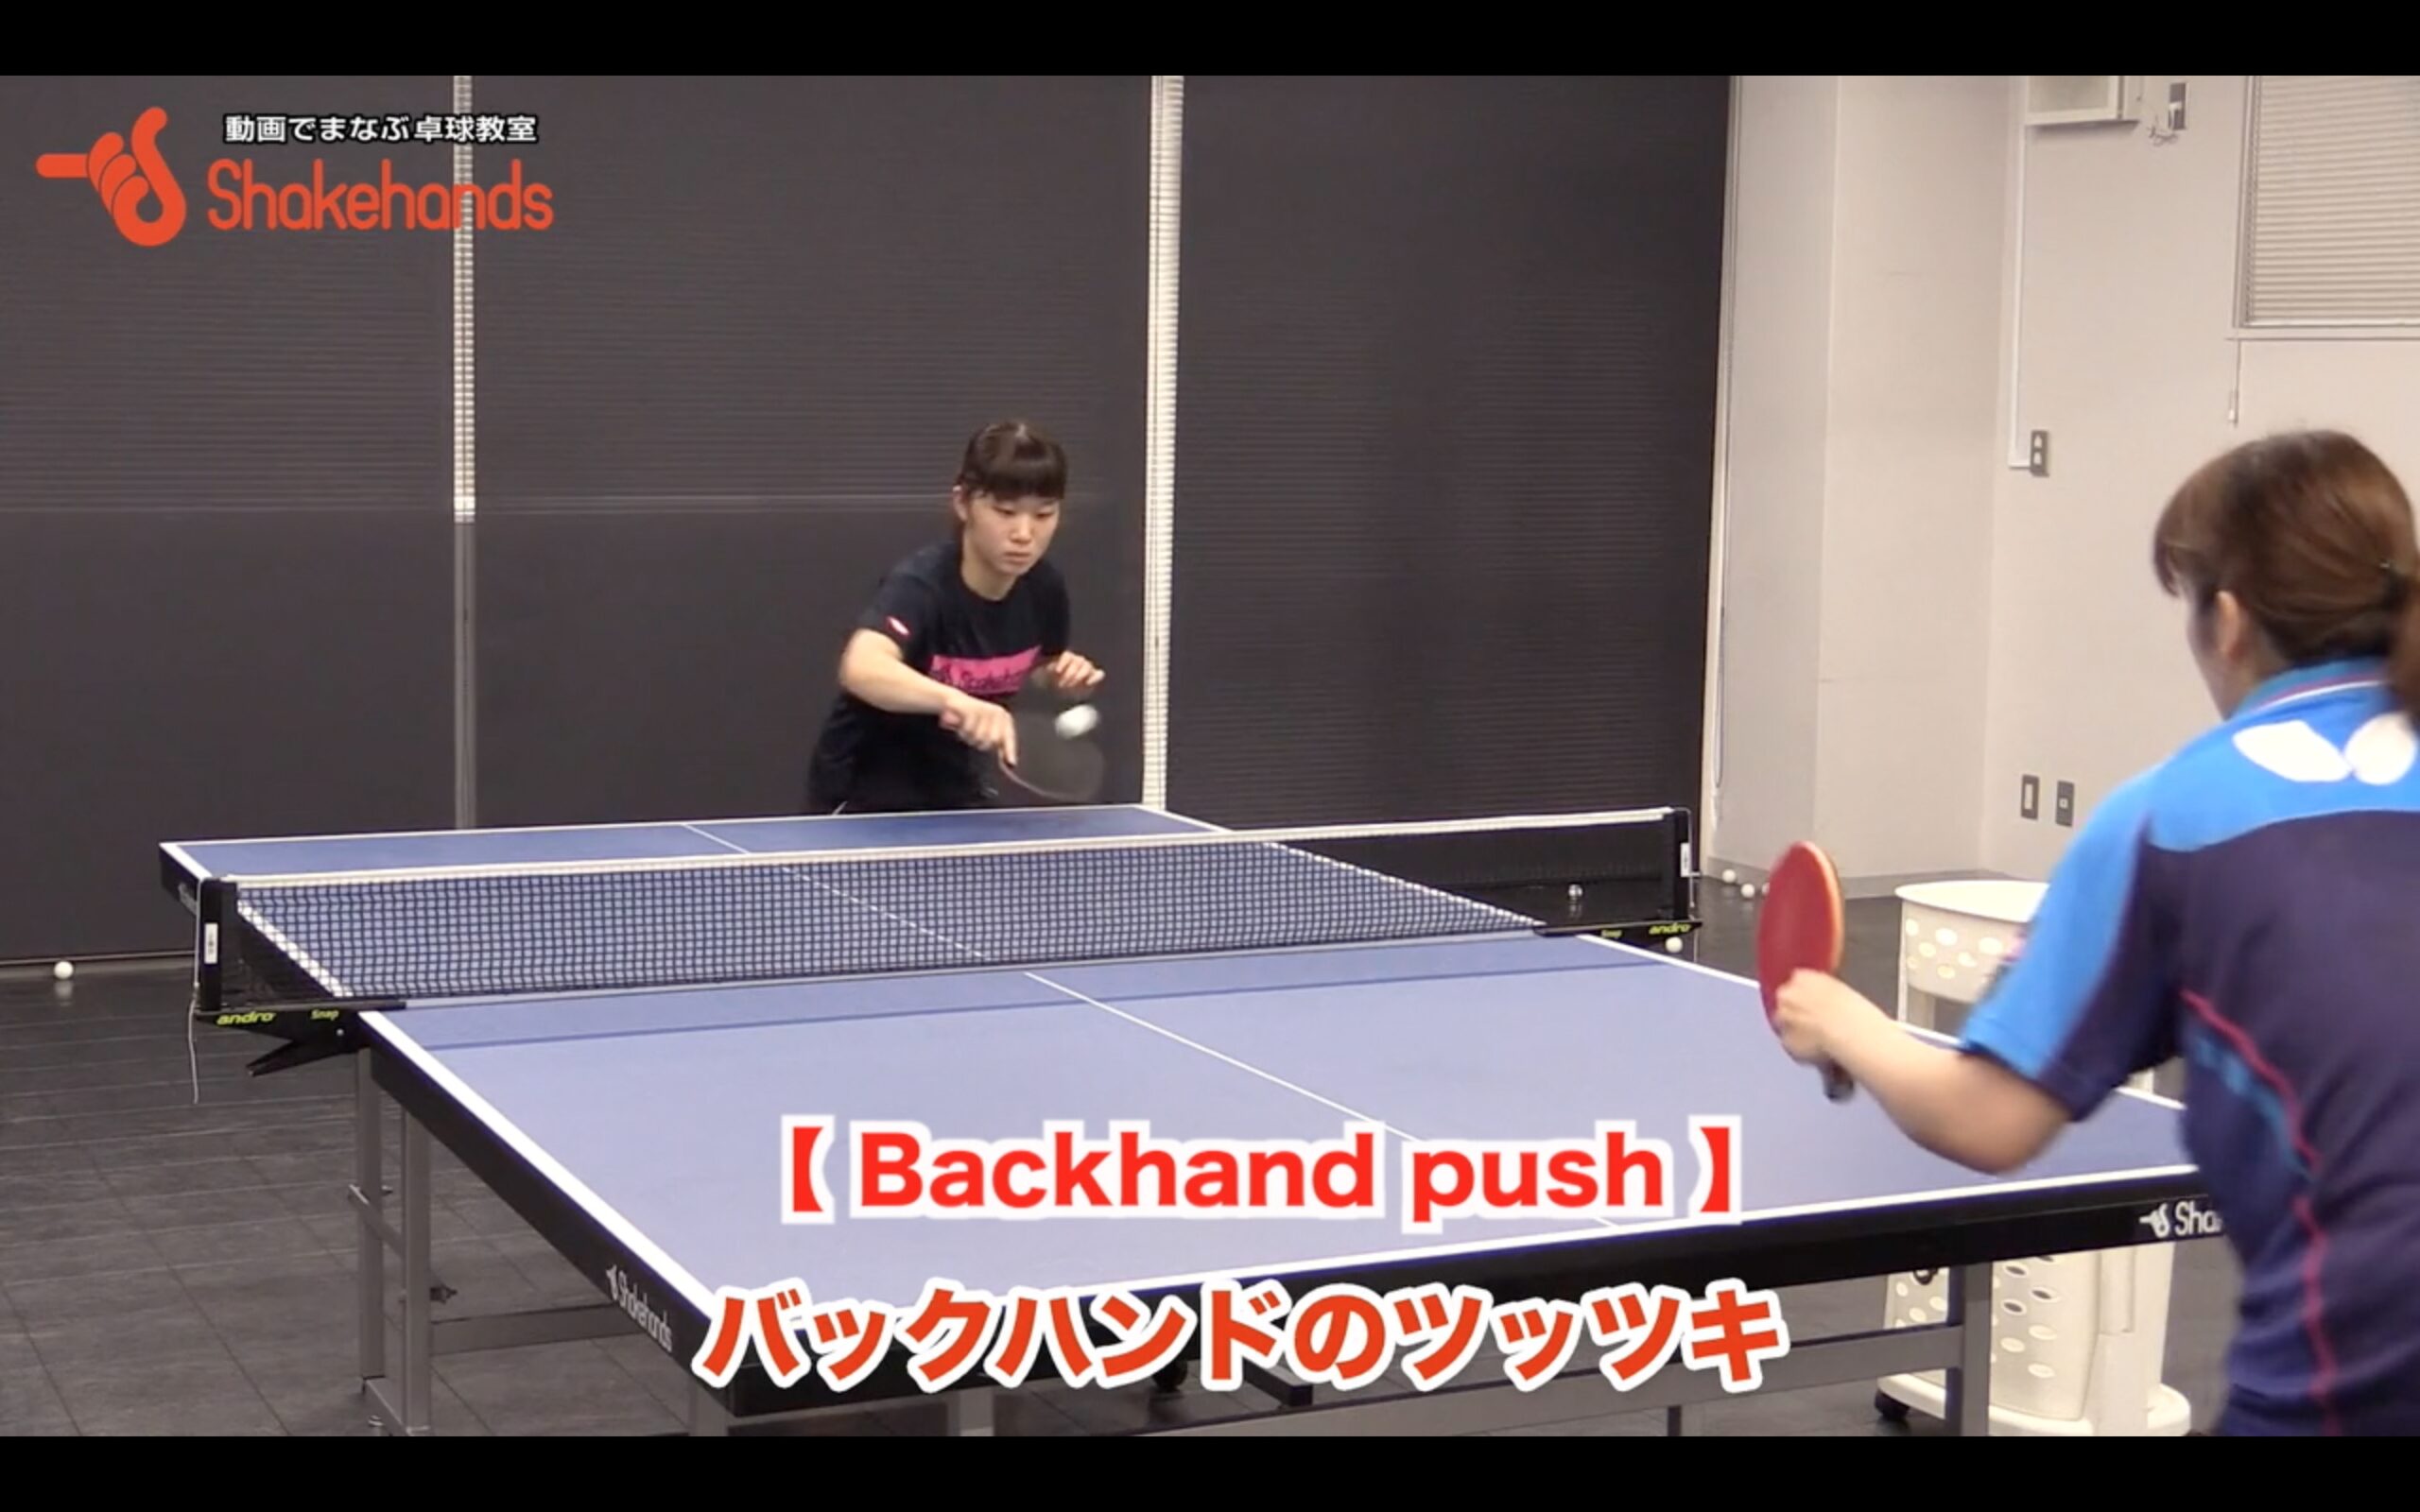 Backhand push